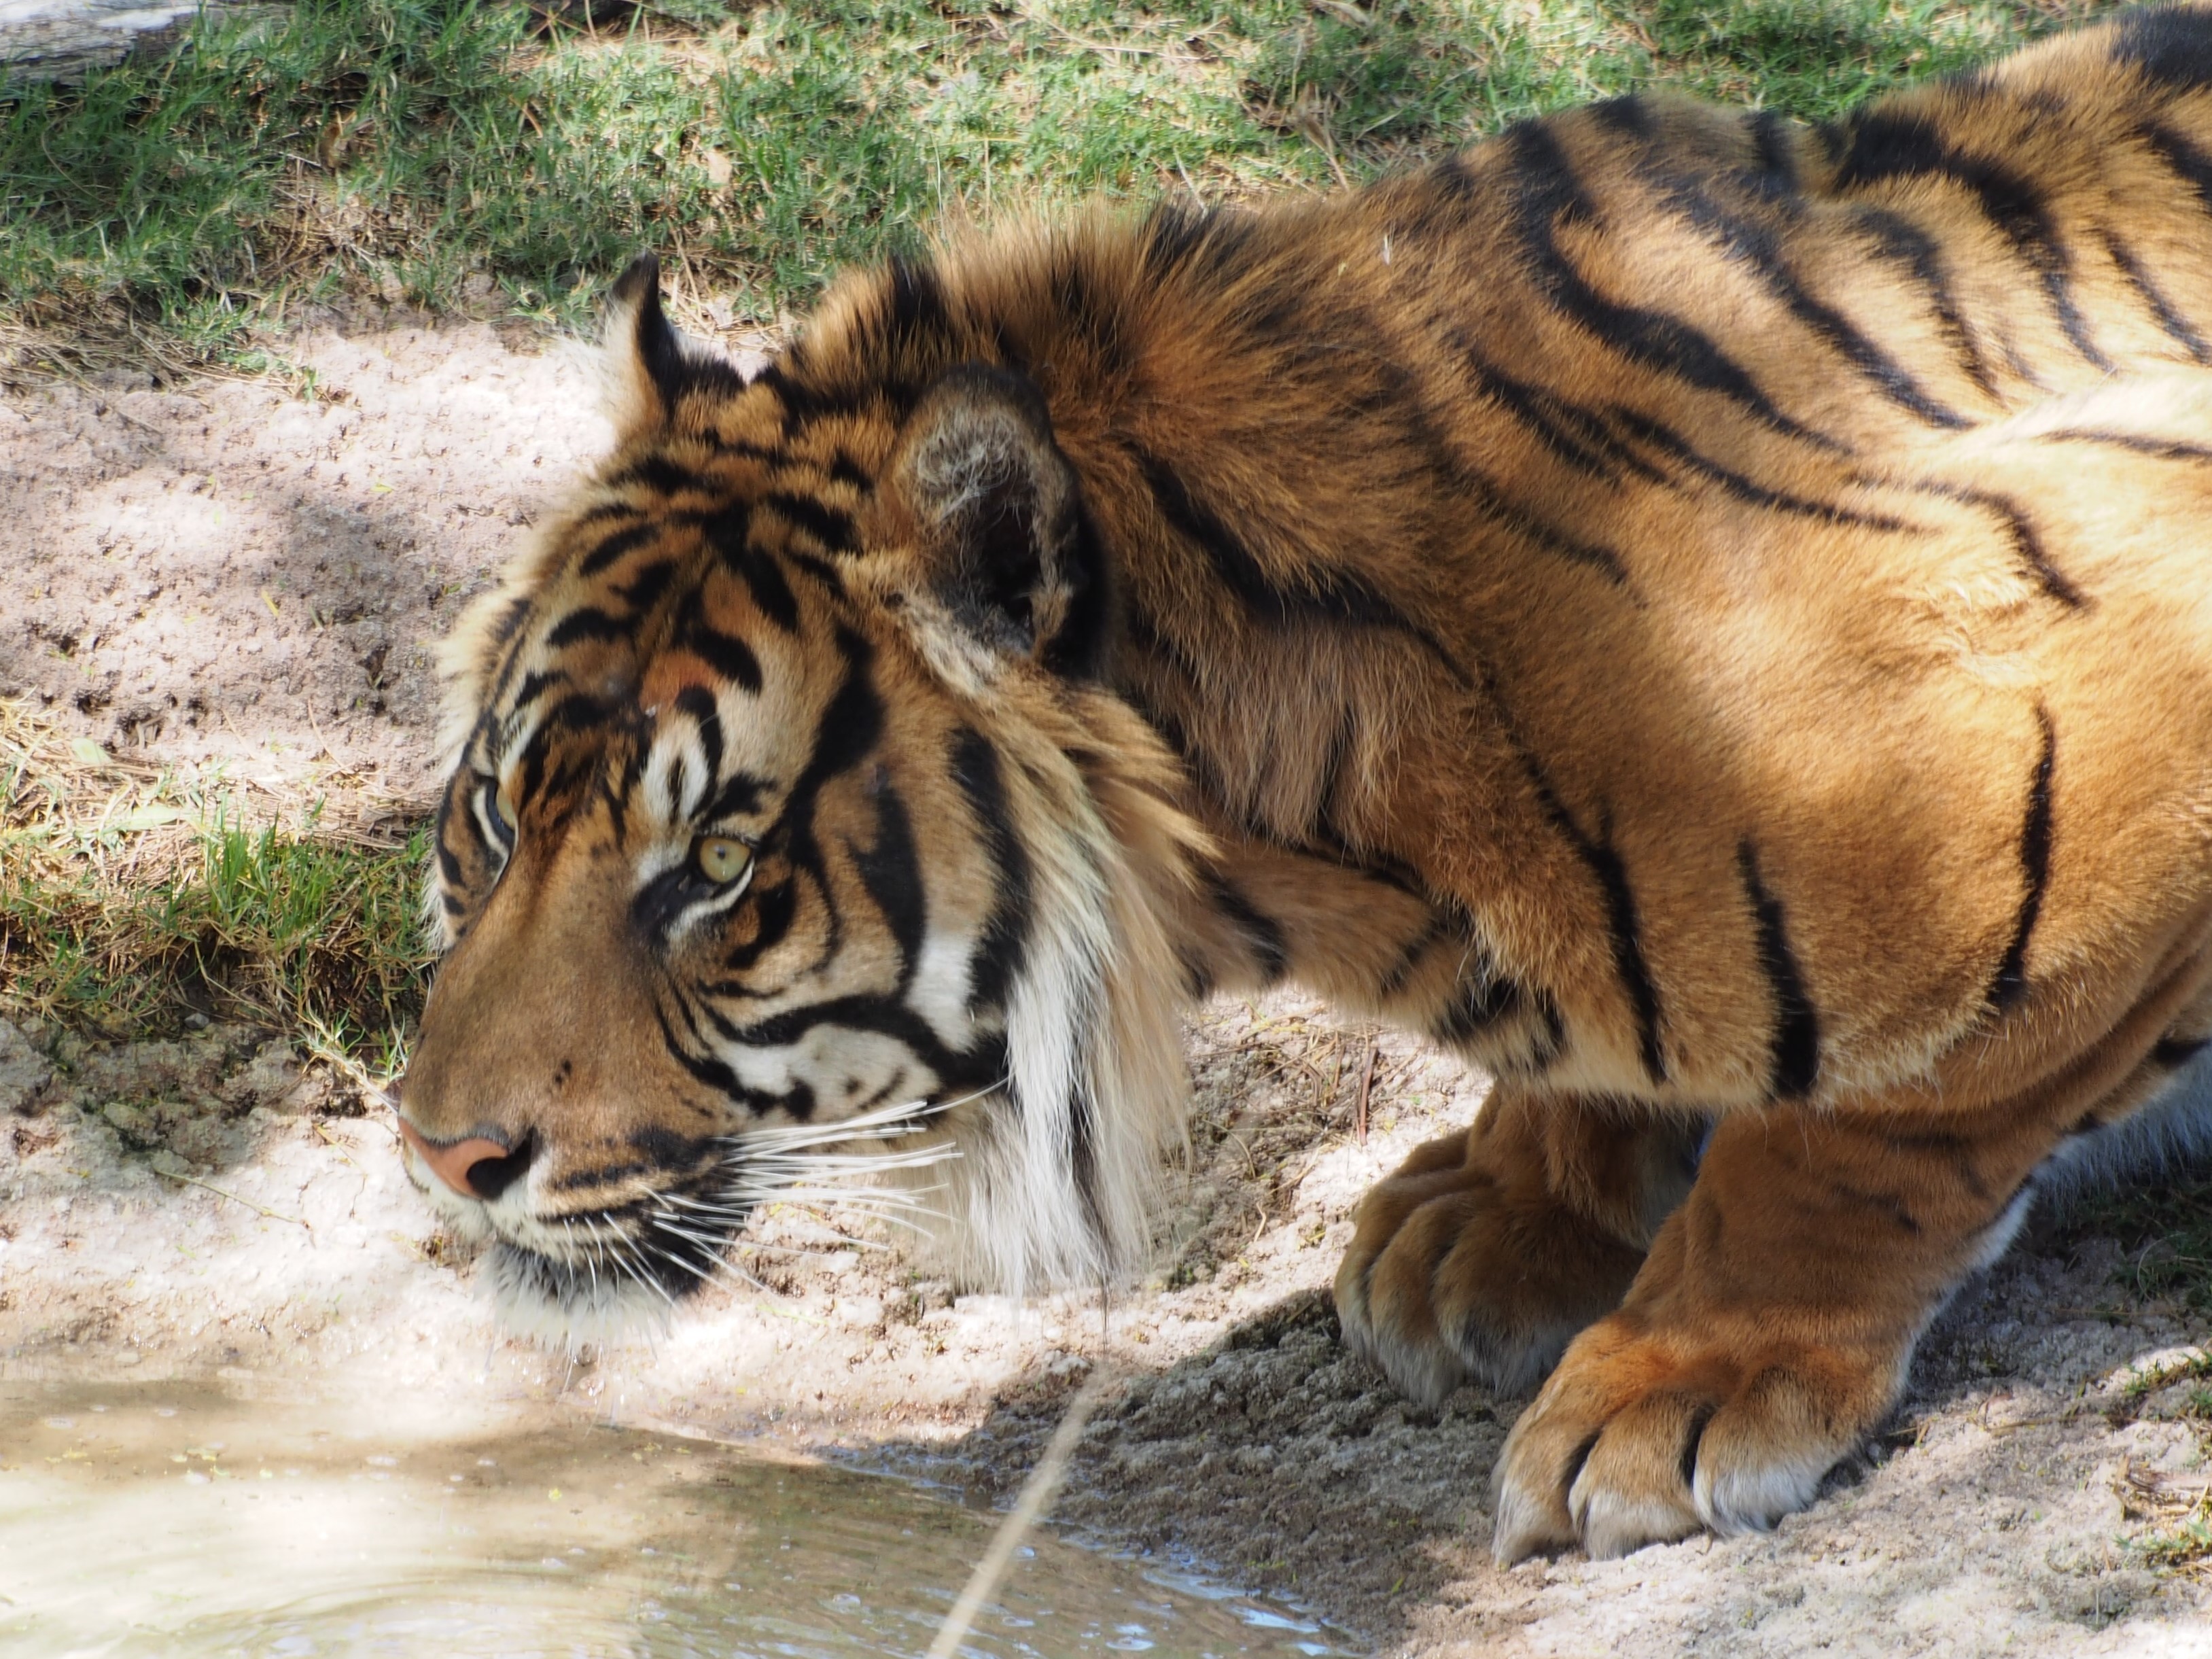 Sumatran tiger crouching to drink water by Jessica Bodgener